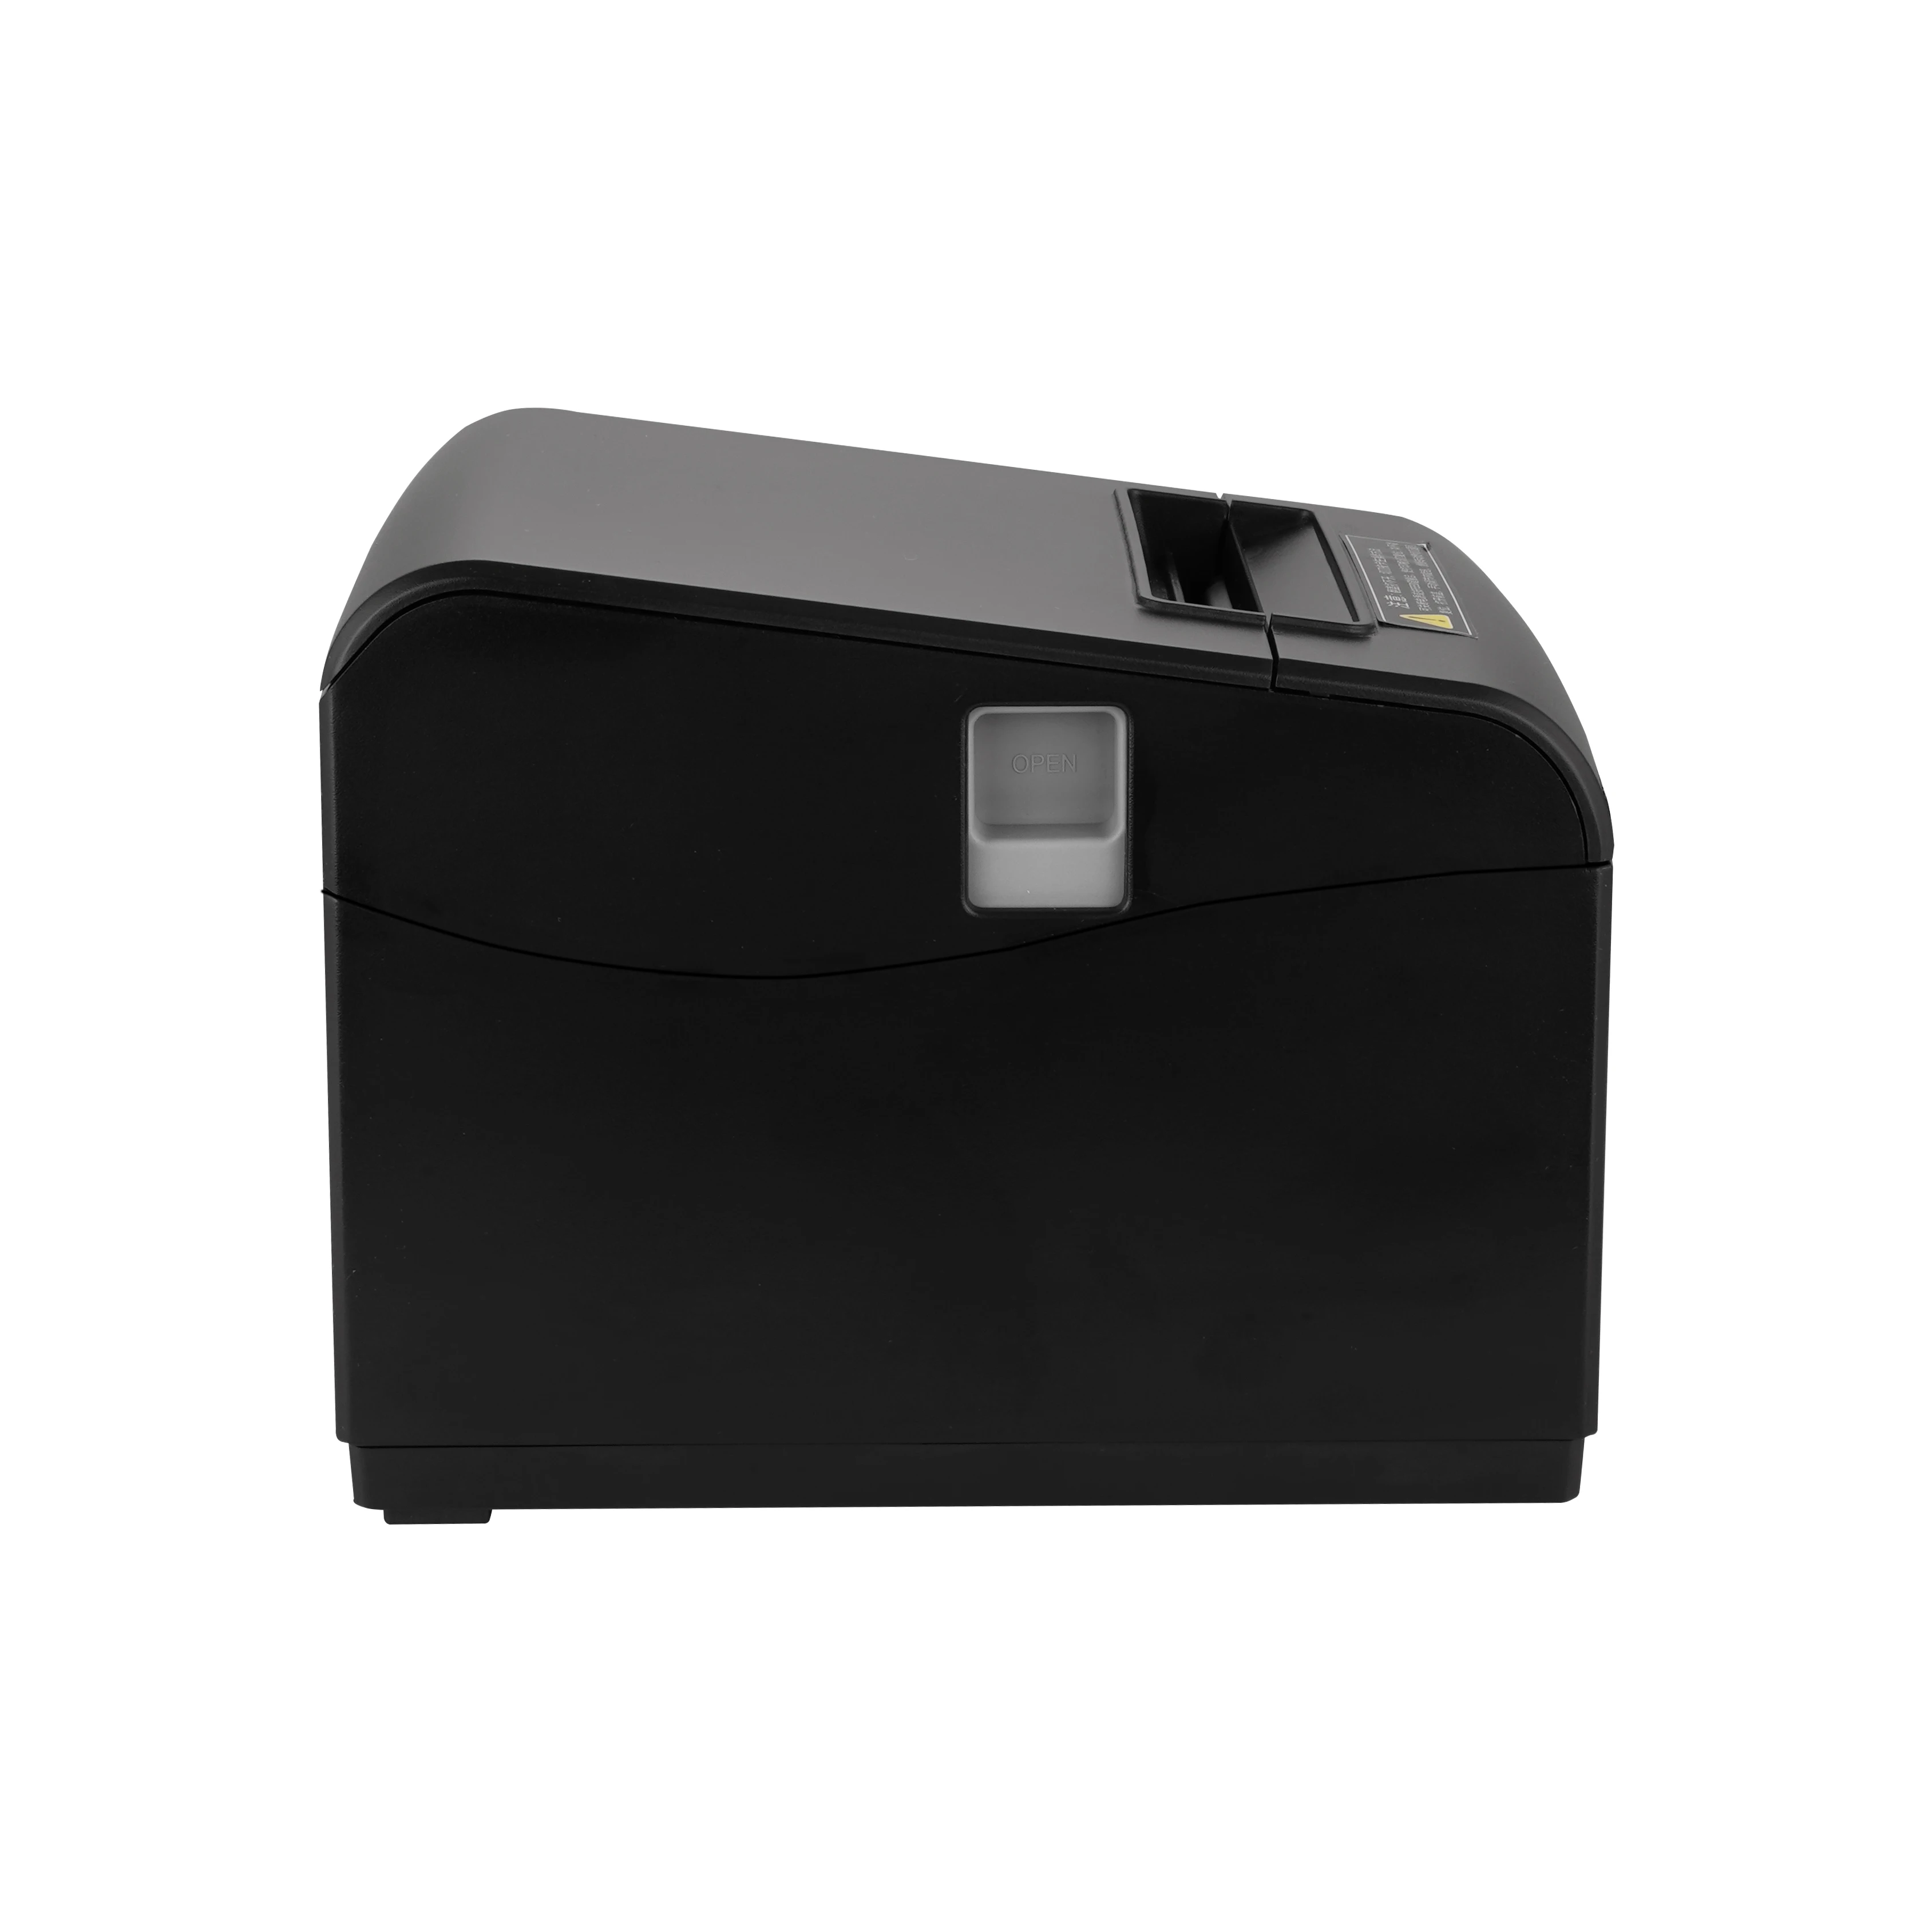 thermal printer inkless 3inch 80mm receipt printer imprimante trmica desktop POS printer